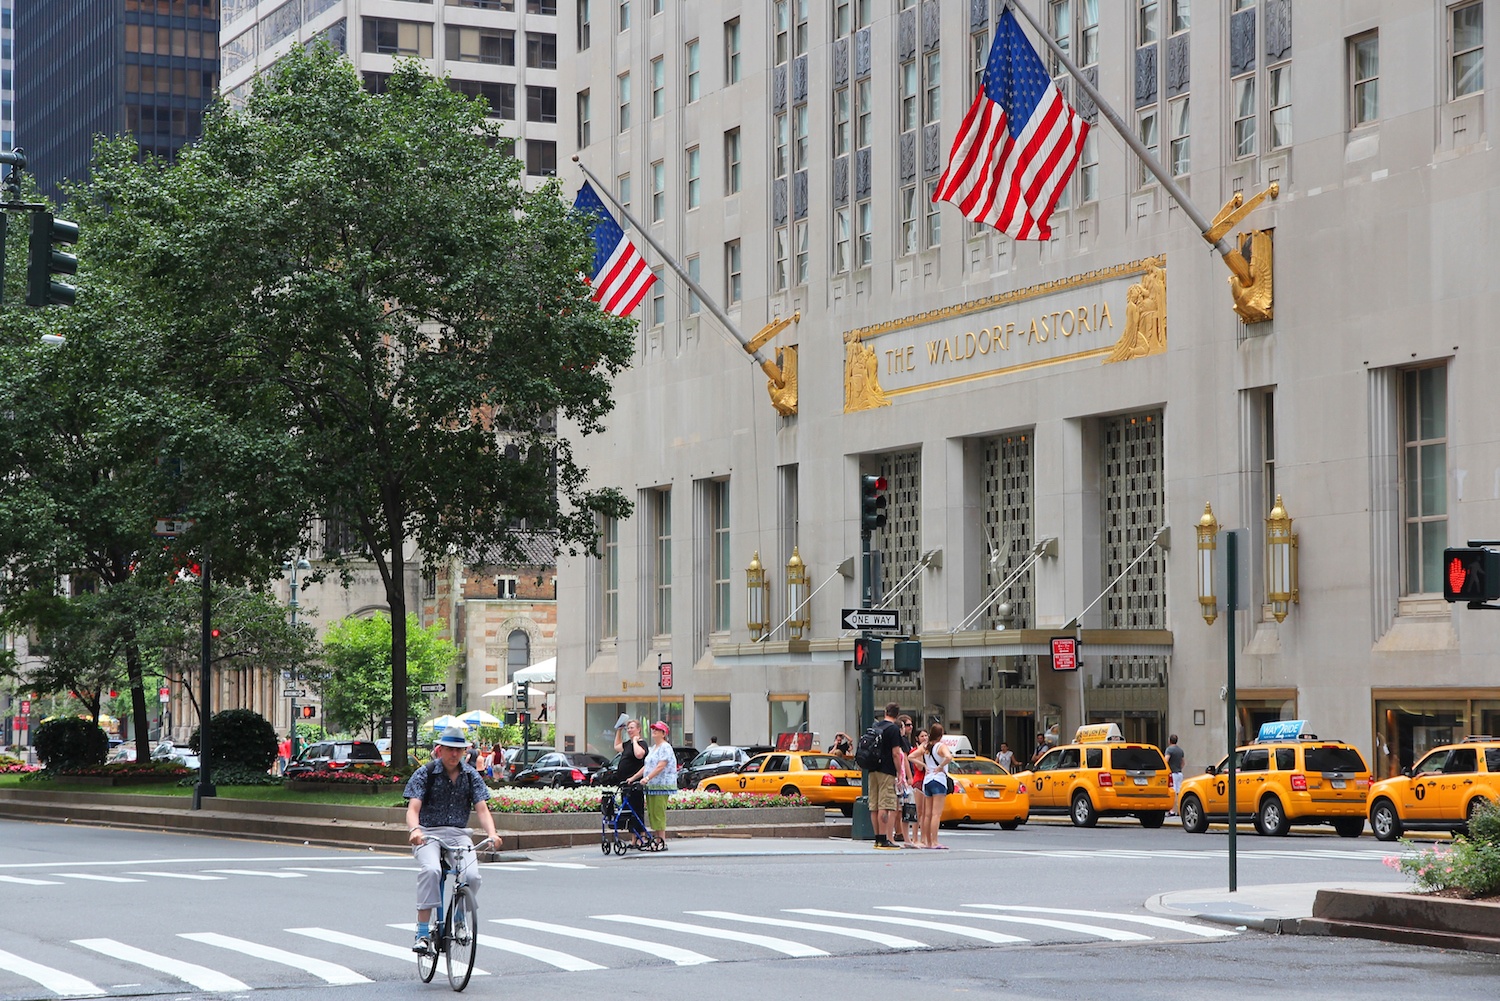 The Waldorf-Astoria hotel in New York